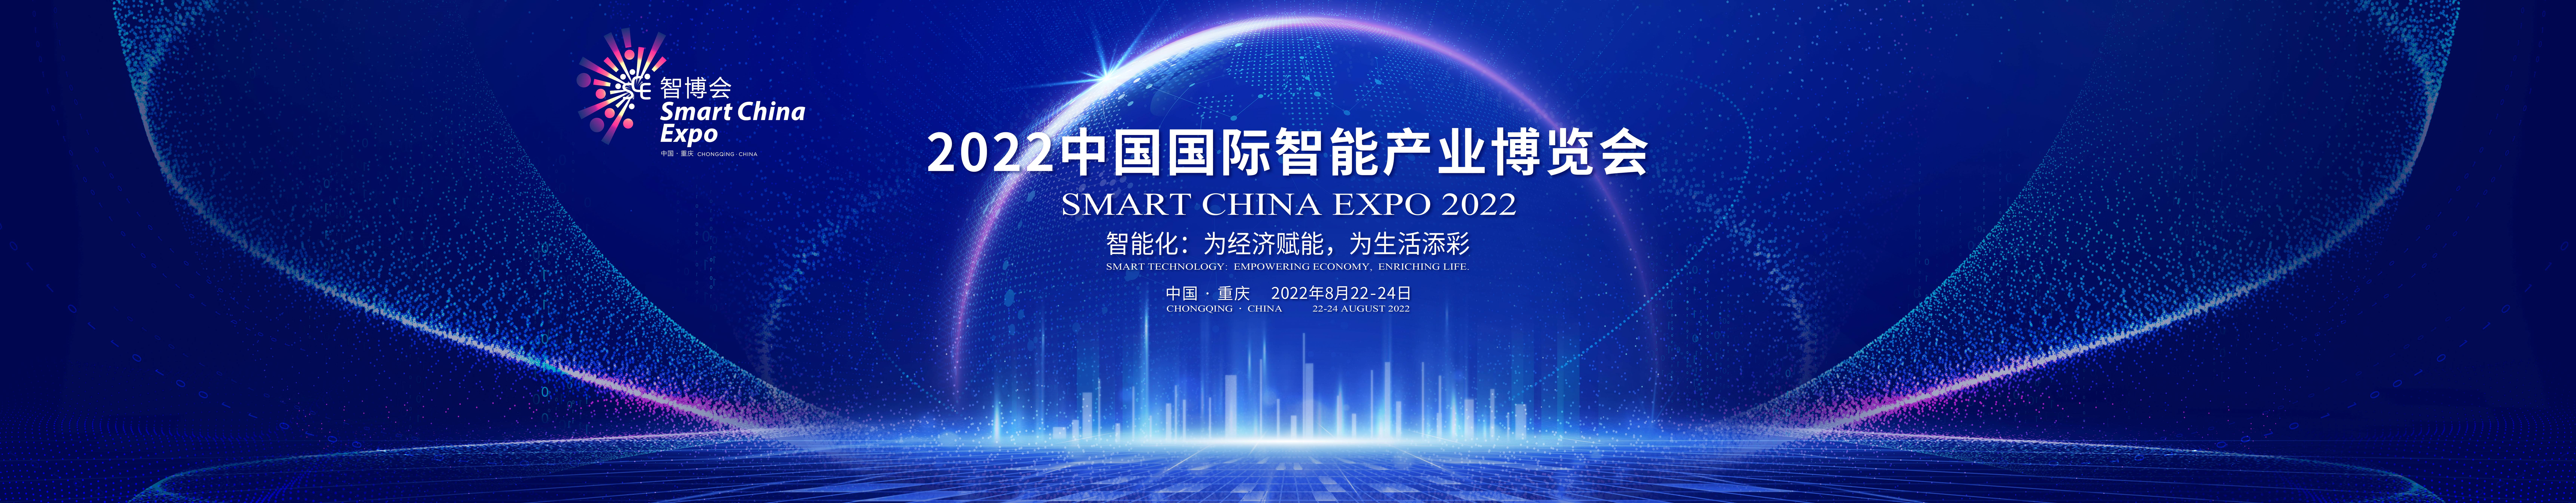 Smart China Expo 2022